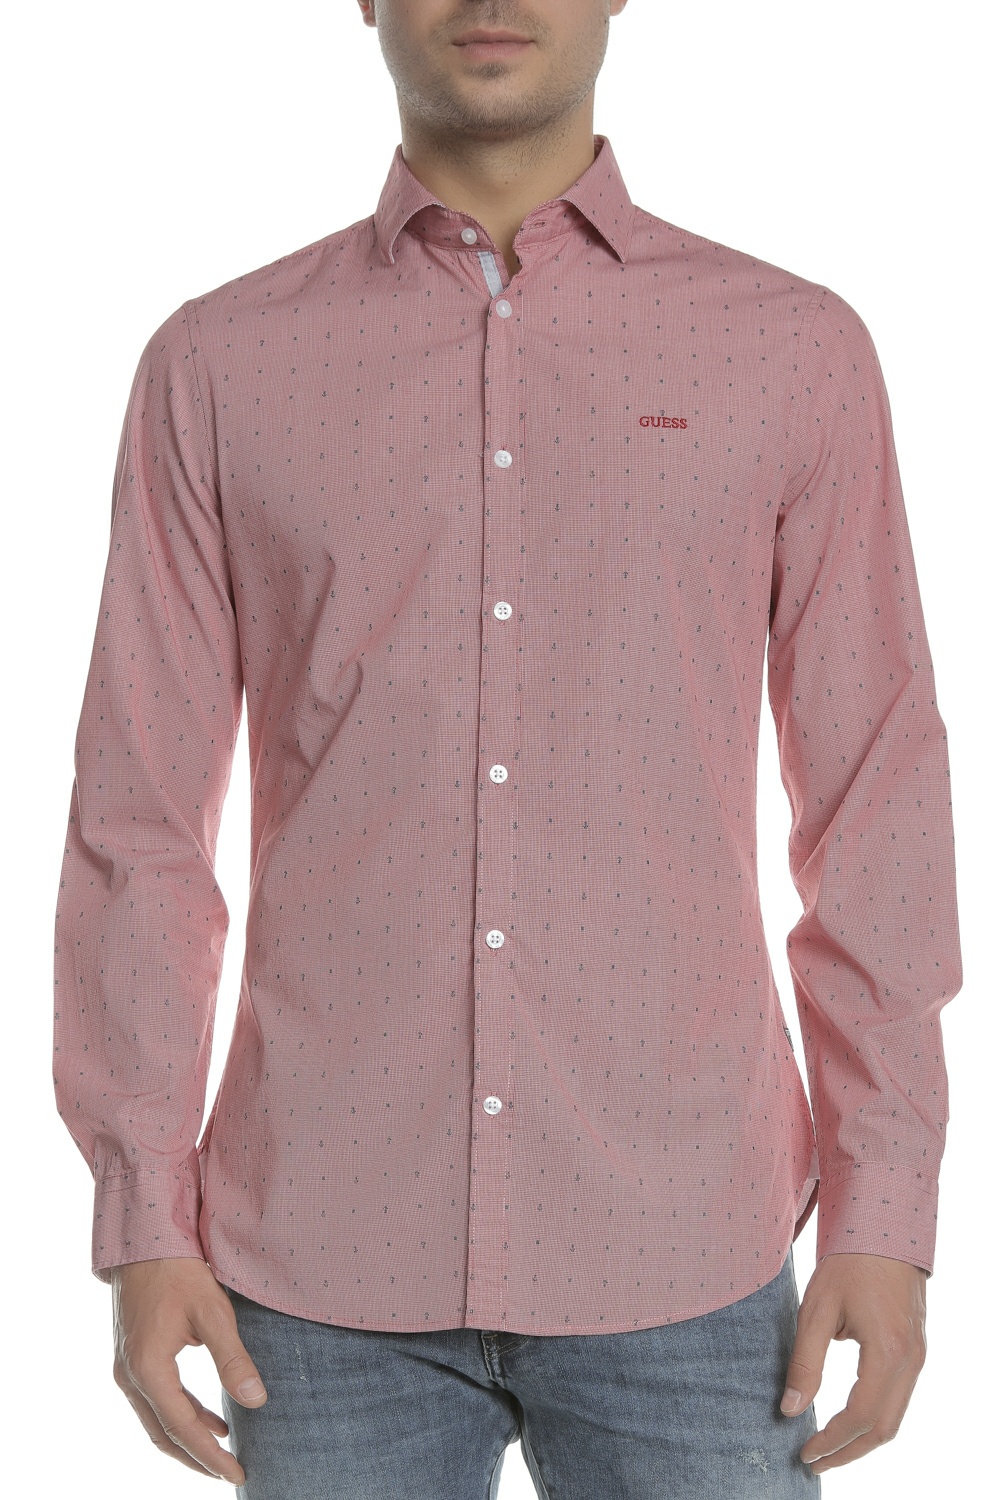 GUESS - Ανδρικό μακρυμάνικο πουκάμισο GUESS ροζ με print